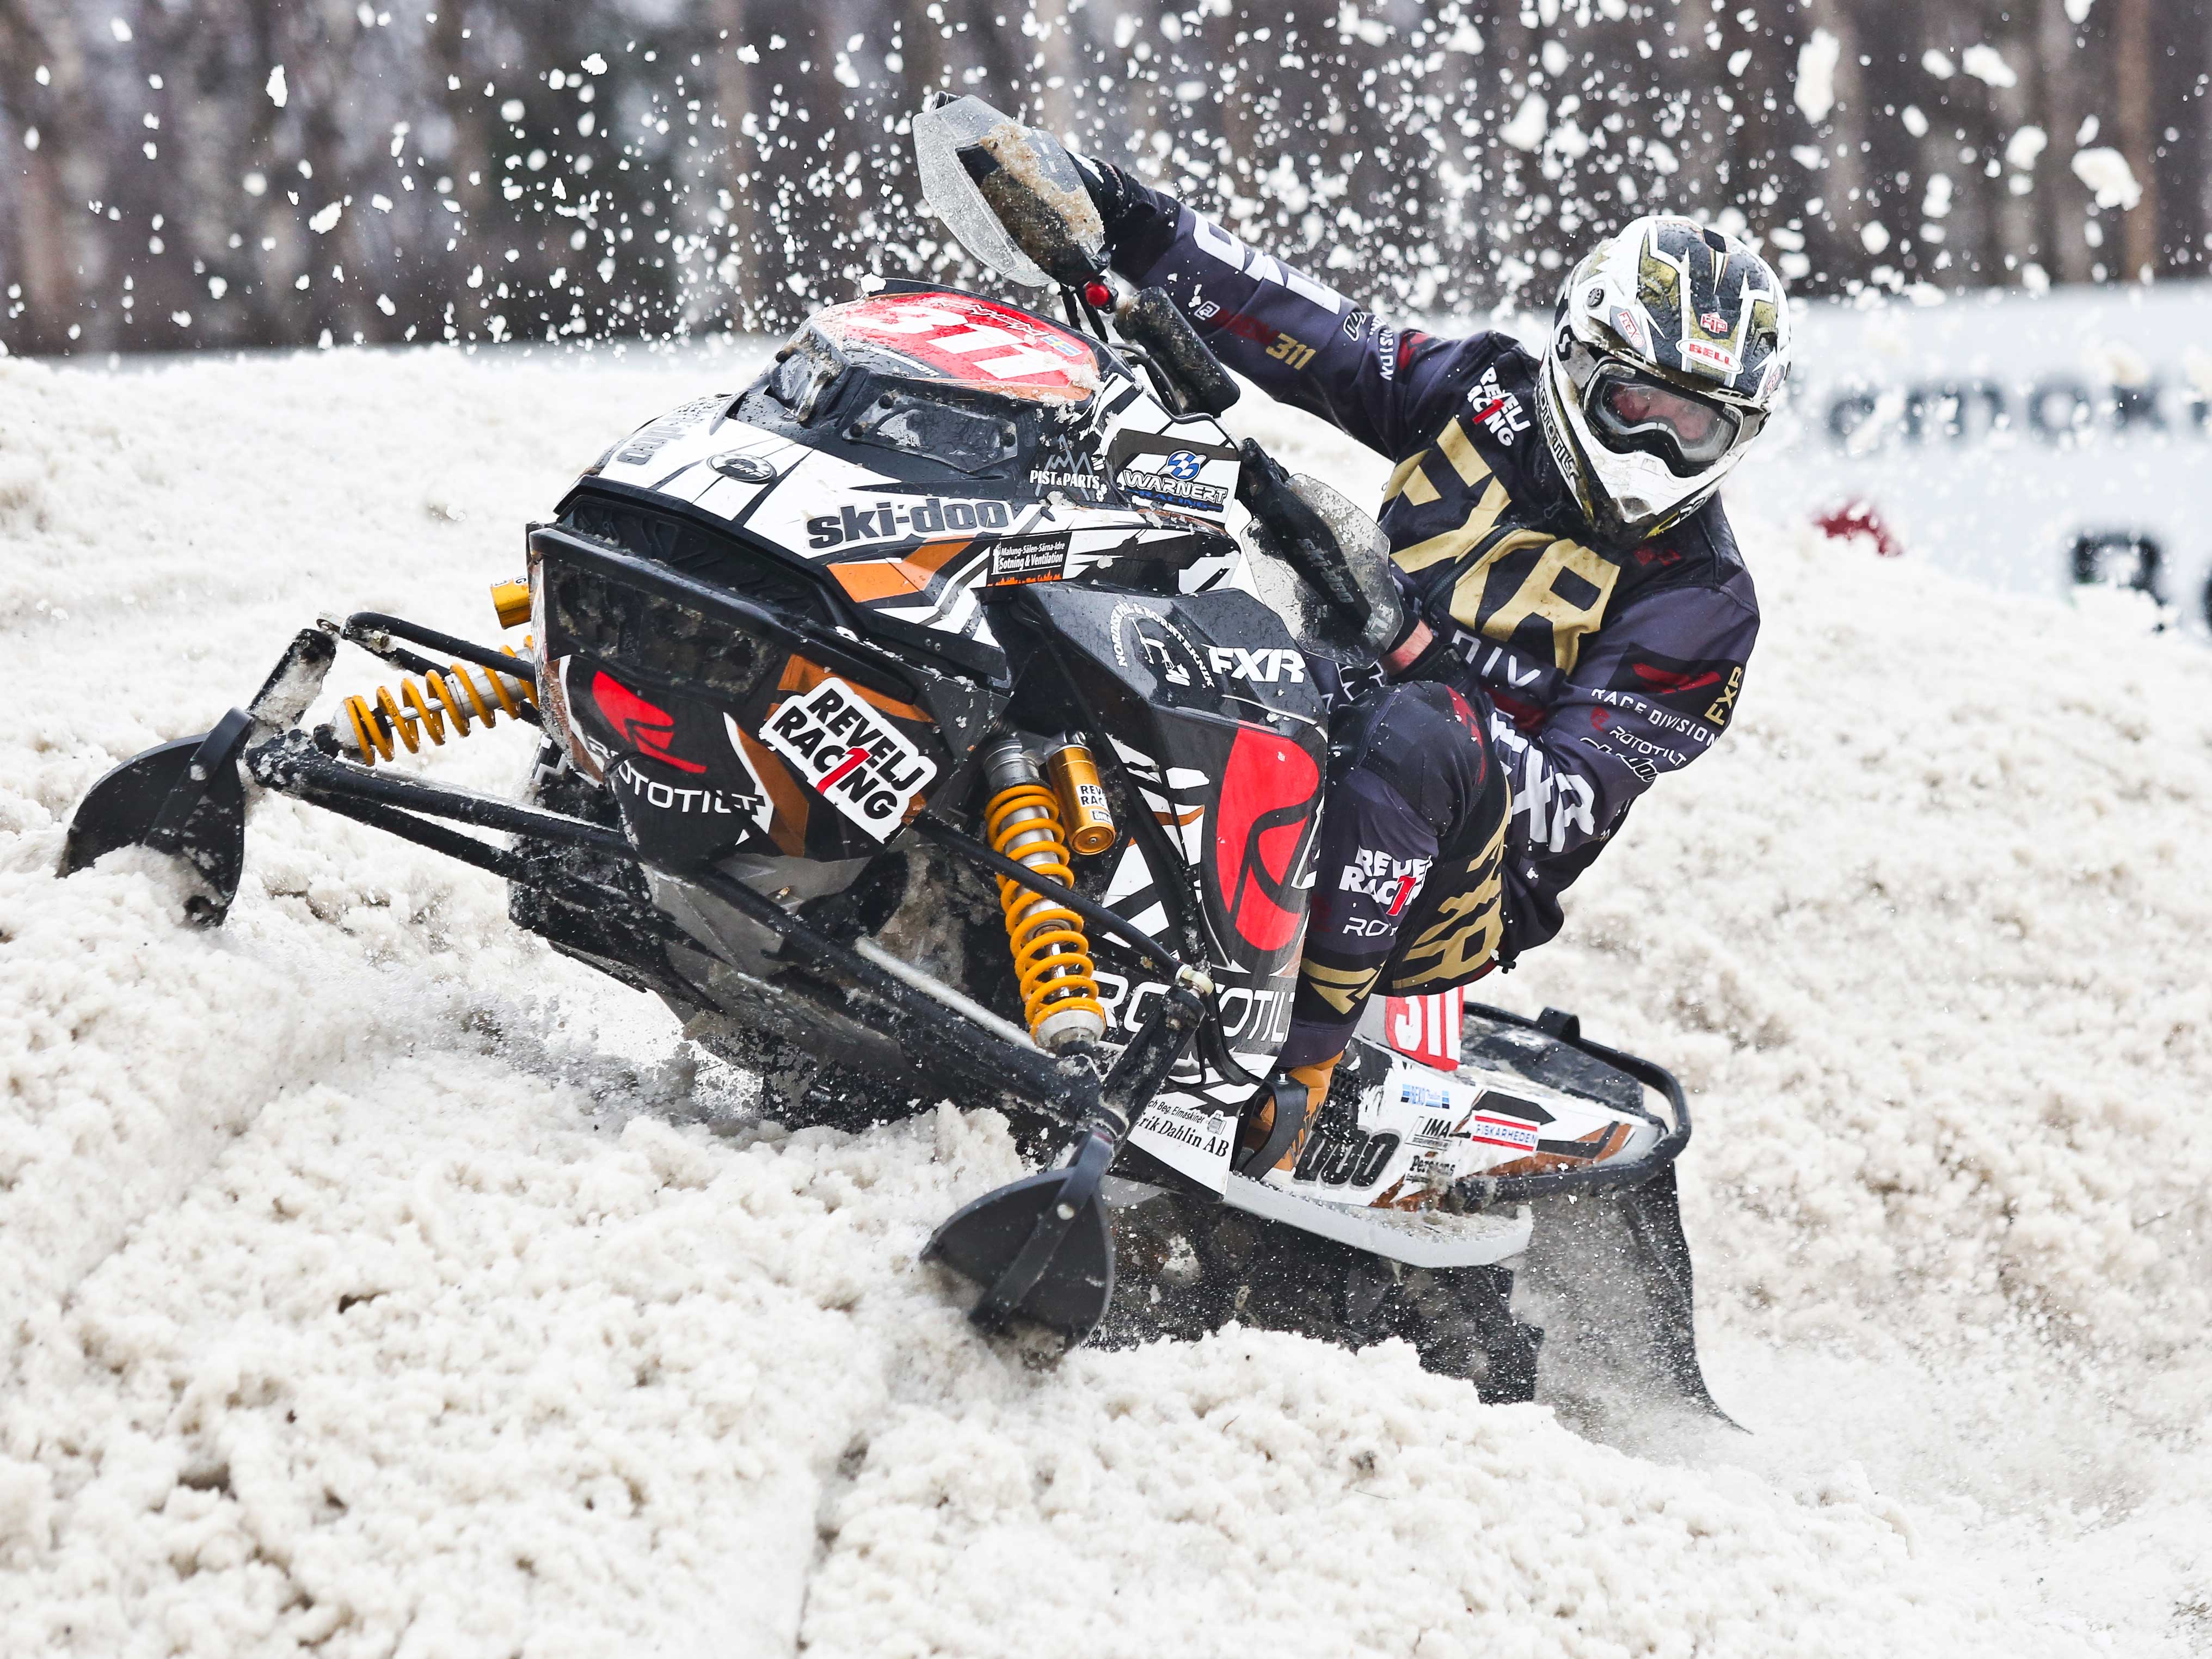 Adam Renheim carving during a snowmobile race